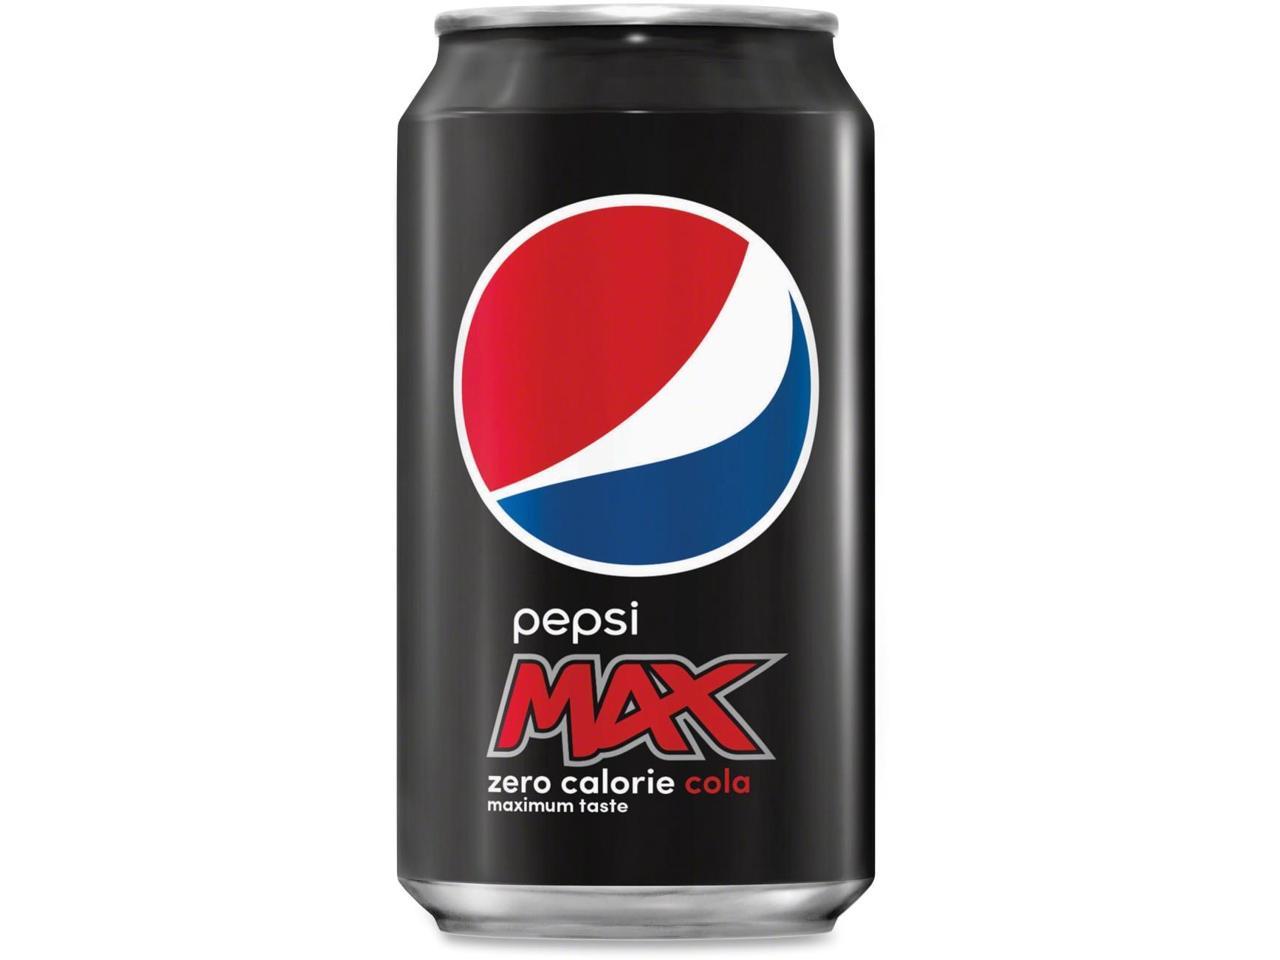 Pepsico Pepsi Max Cola Canned Beverage - Newegg.com